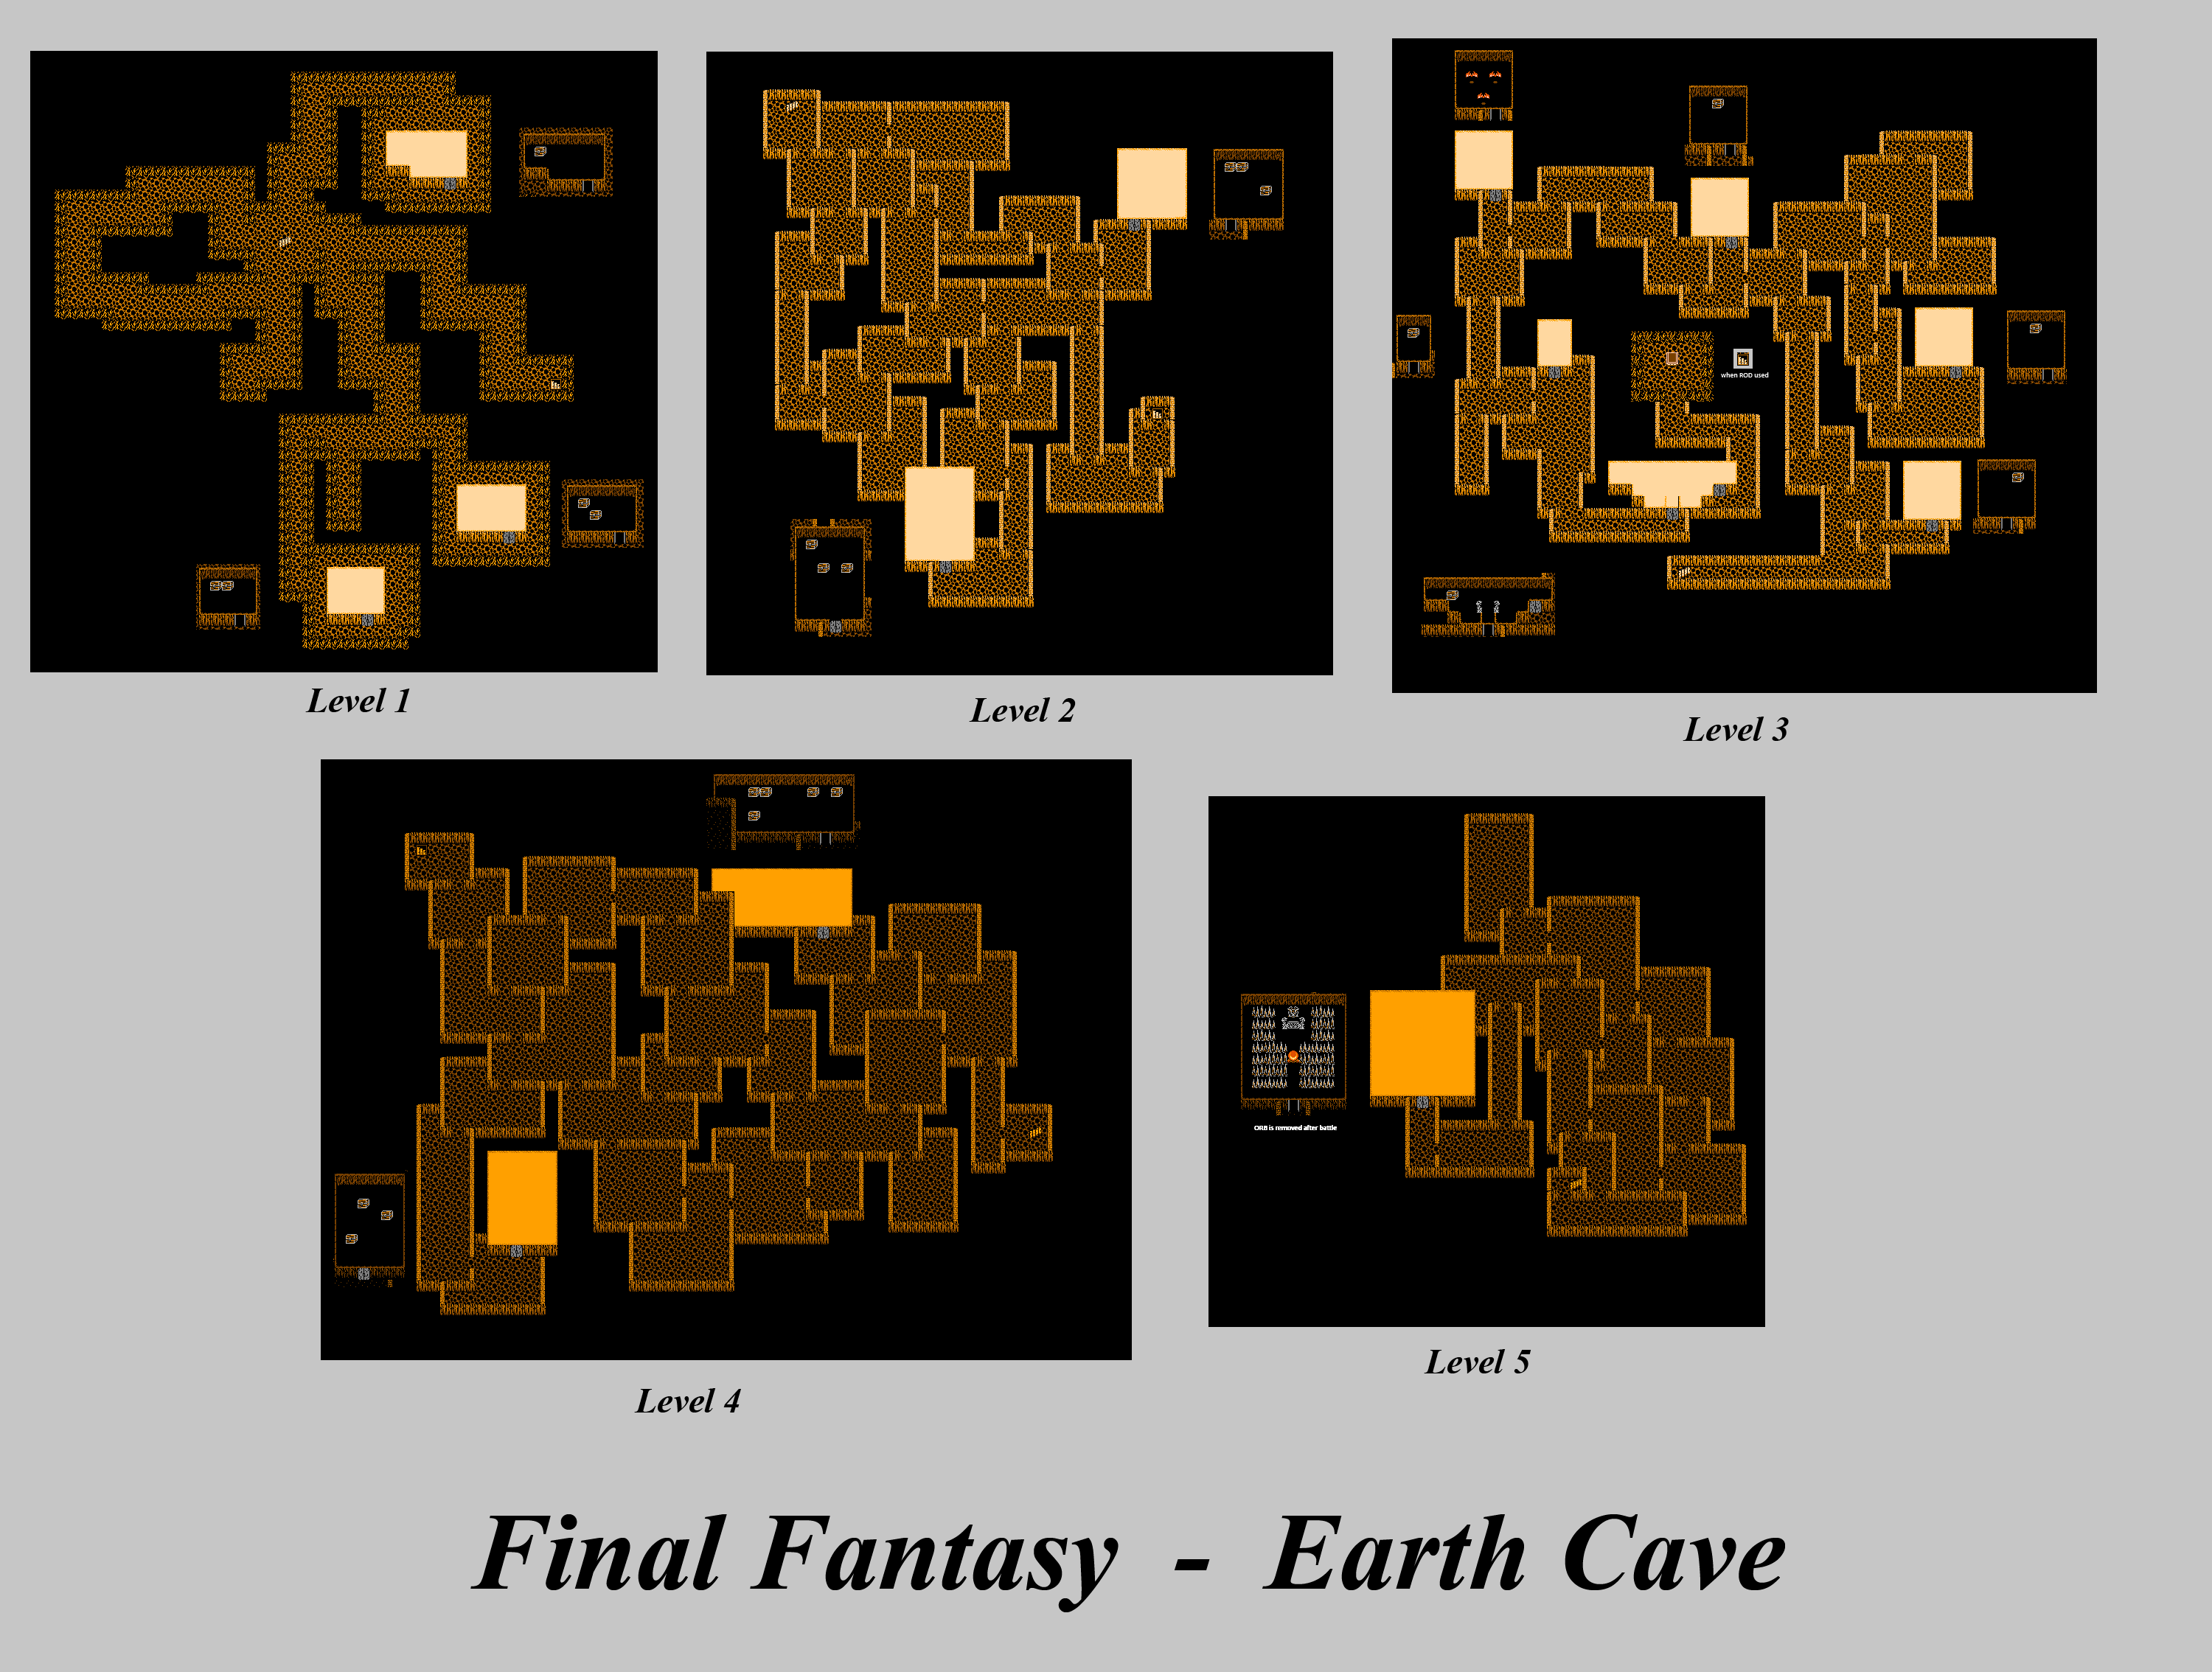 Final Fantasy - Earth Cave